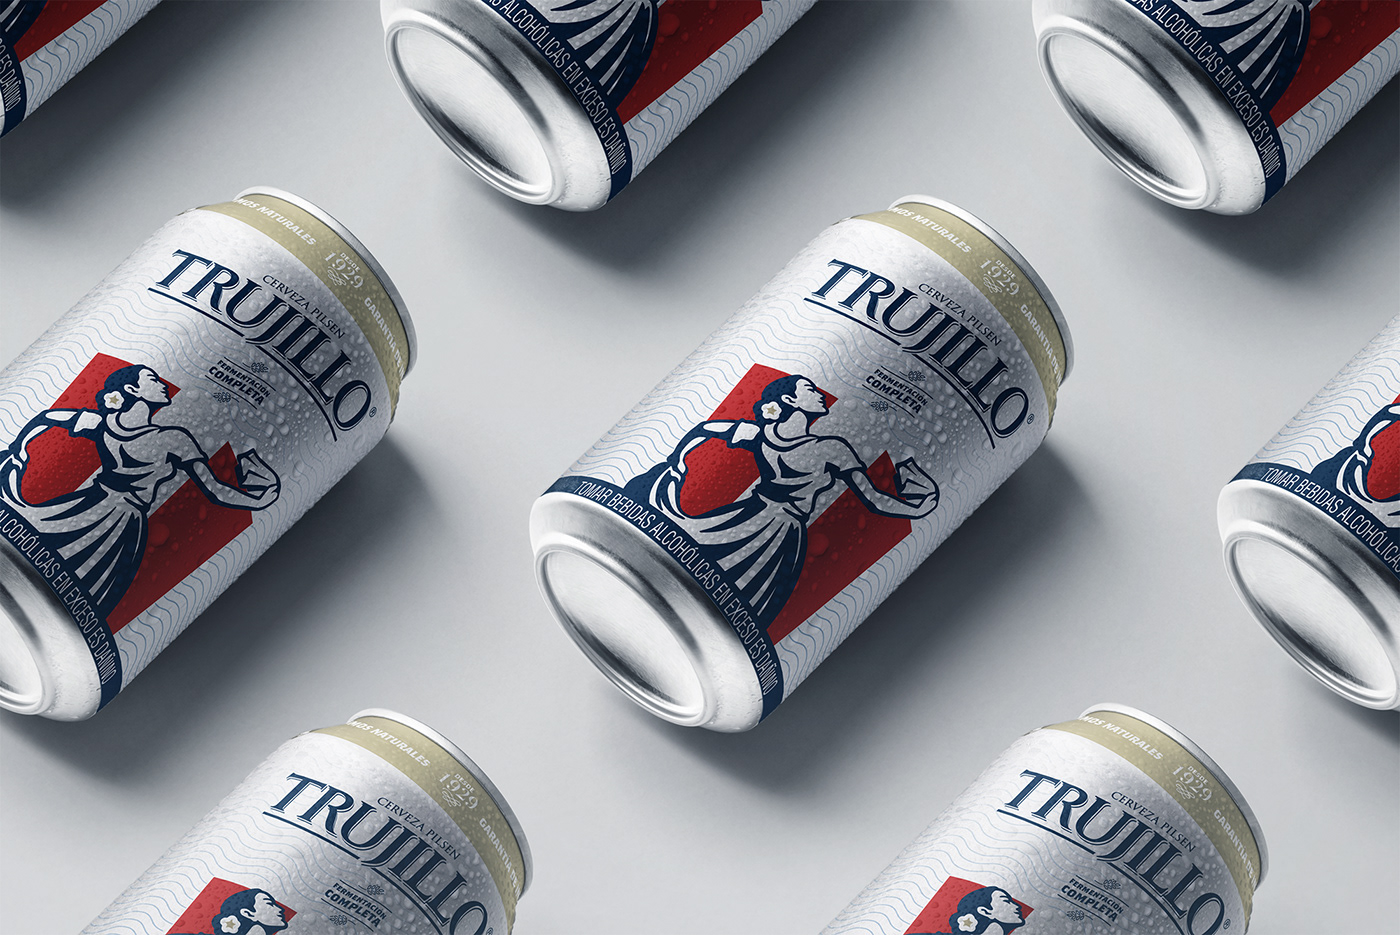 beer brand branding  design Label peru Packaging pilsen rebranding trujillo